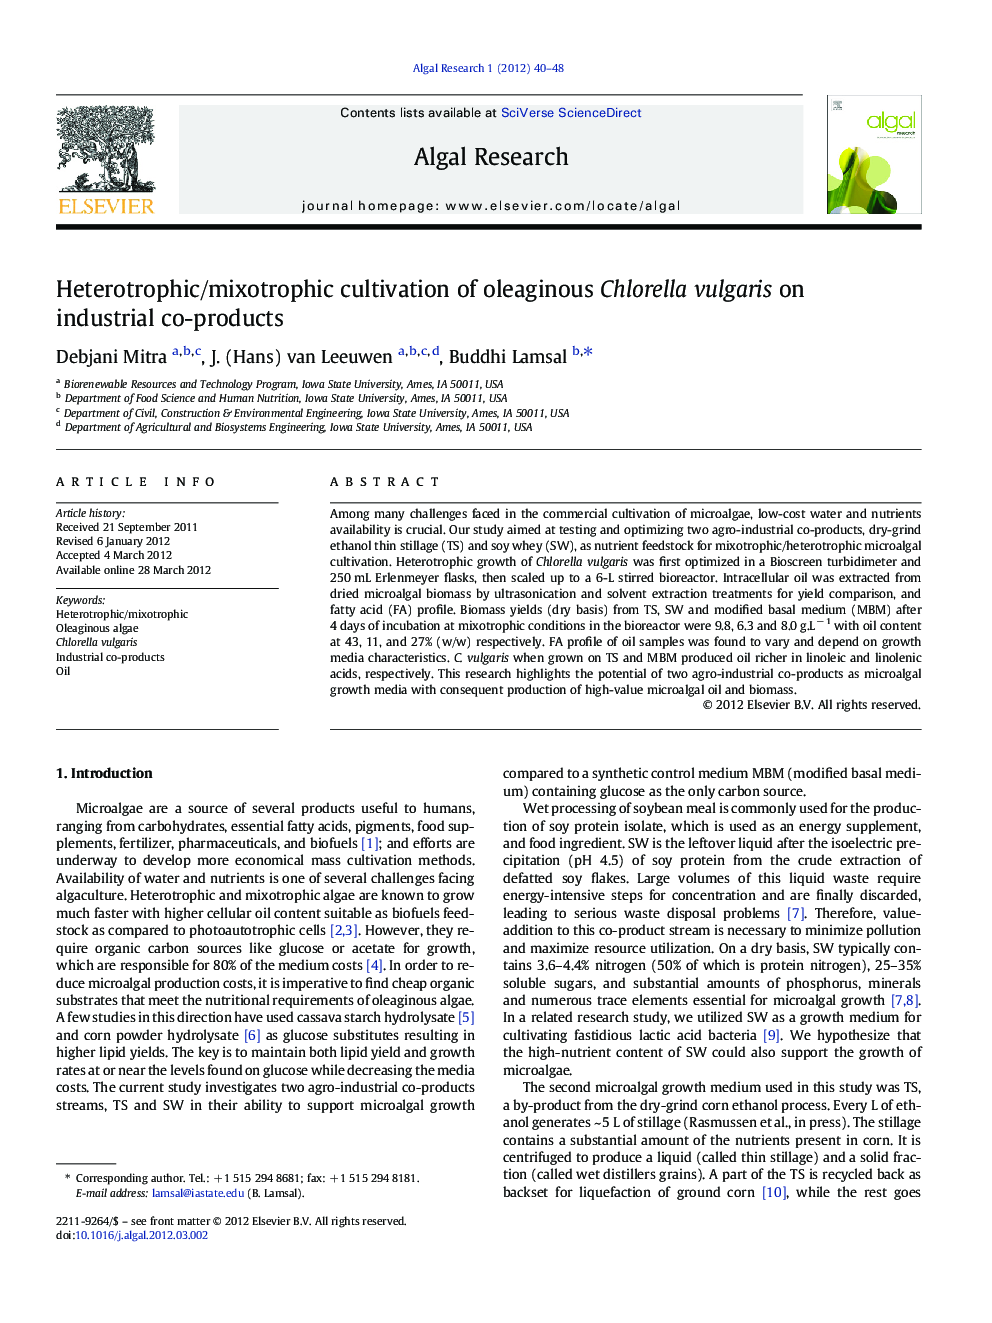 Heterotrophic/mixotrophic cultivation of oleaginous Chlorella vulgaris on industrial co-products